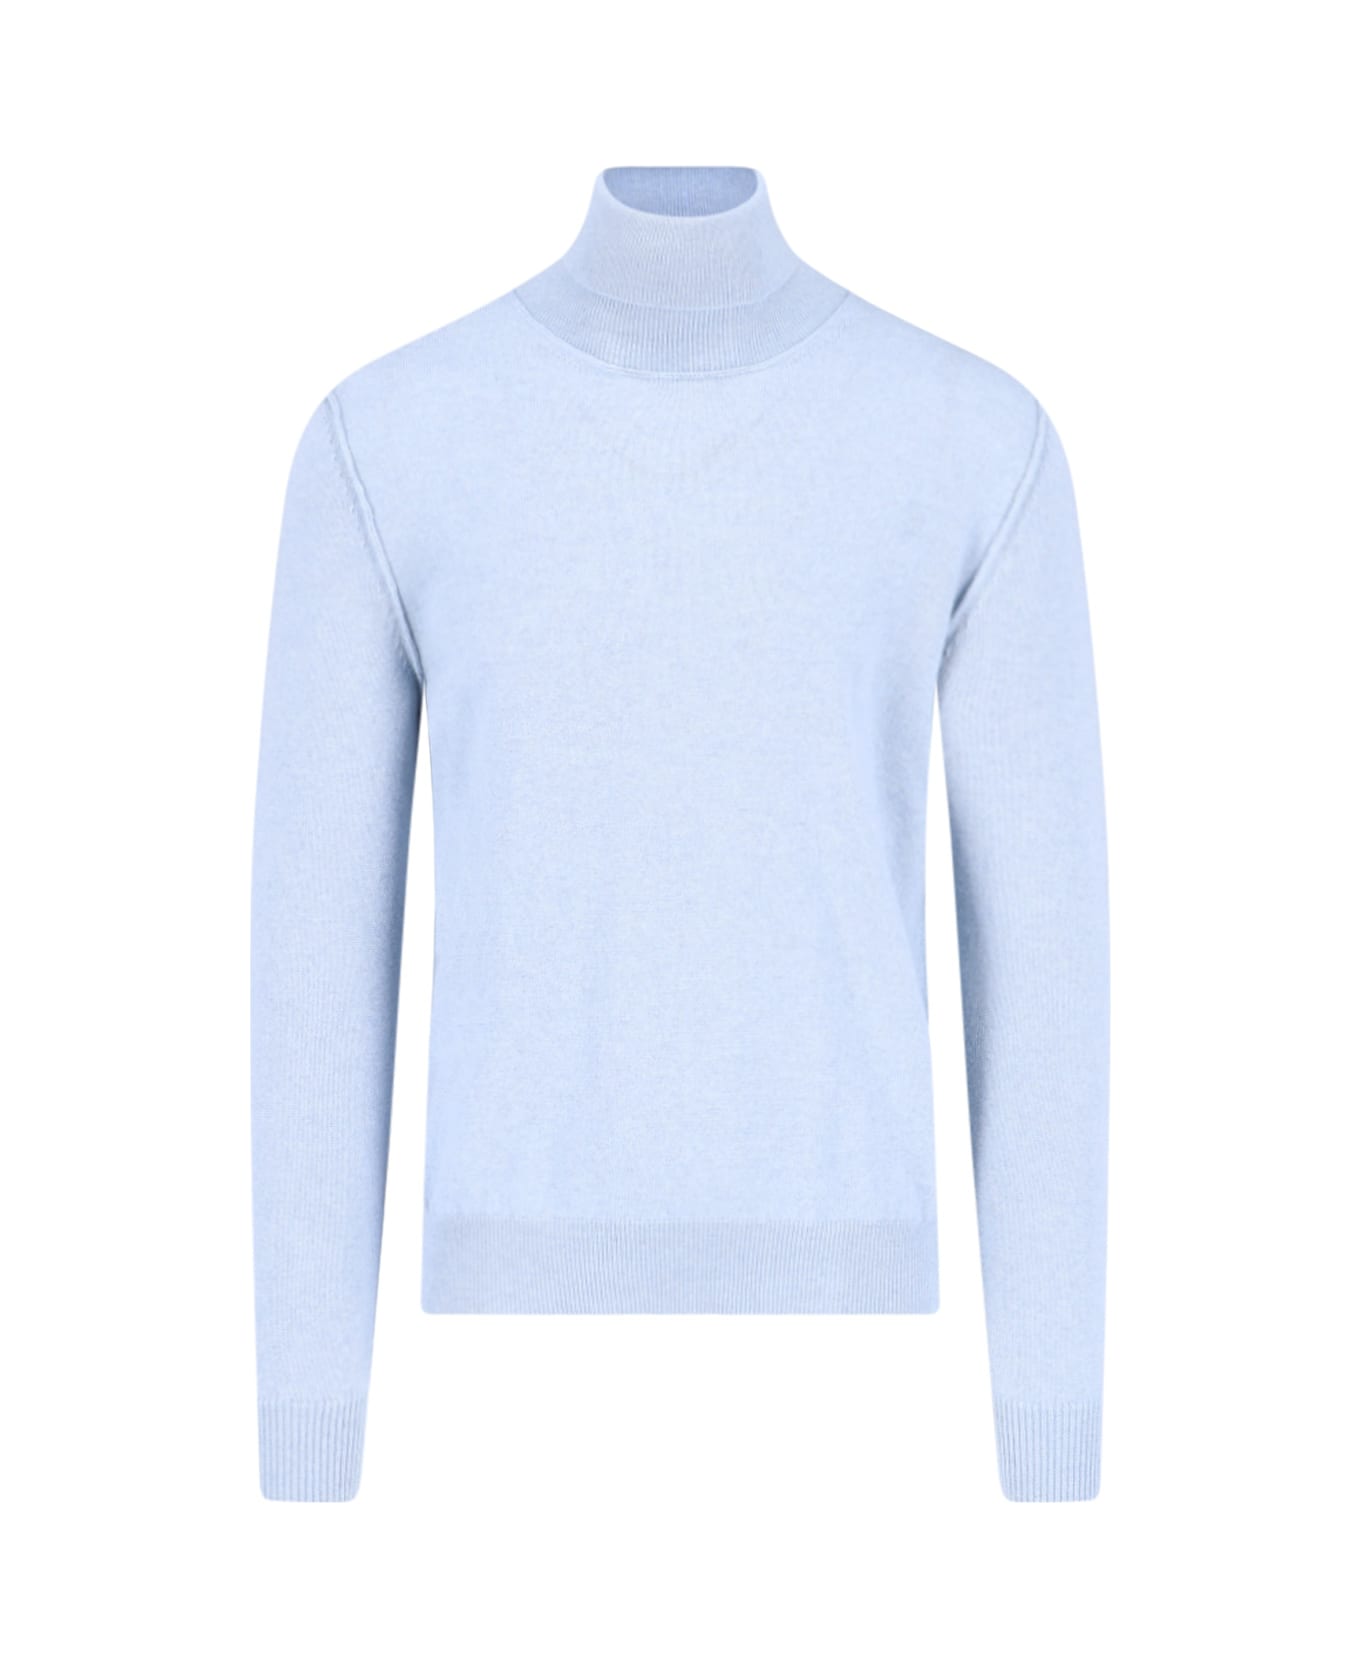 Maison Margiela Cashmere Sweater - Light blue